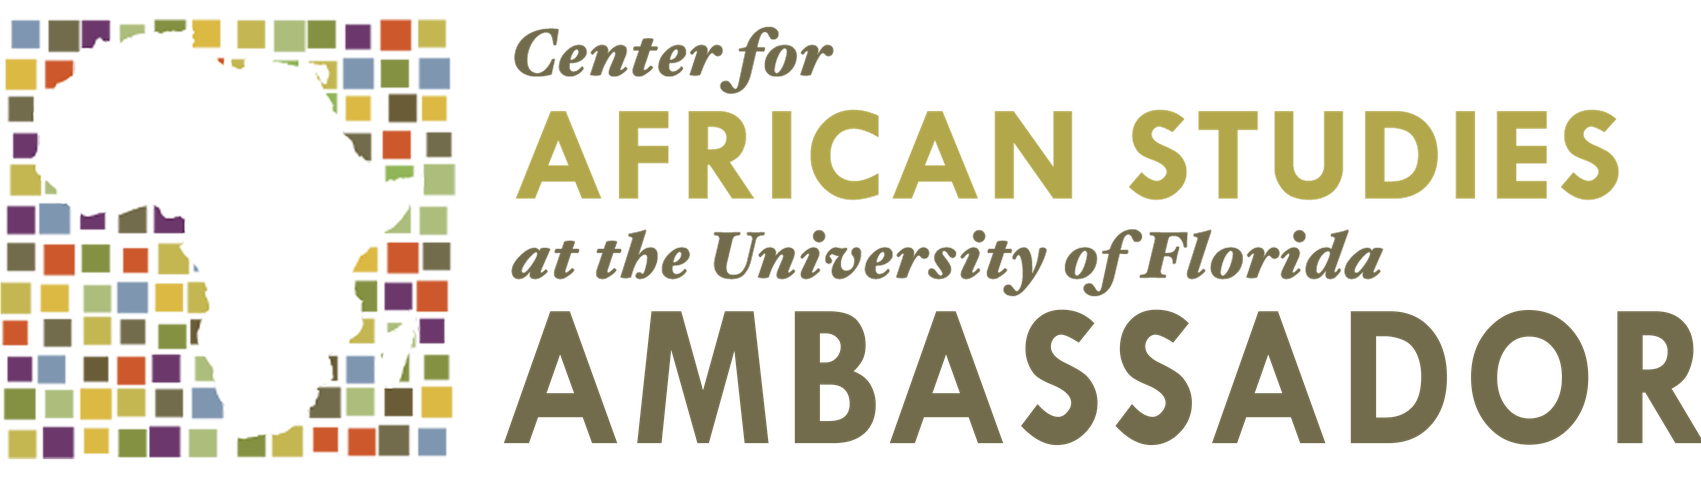 image displaying logo of University of Florida CAS Ambassadors